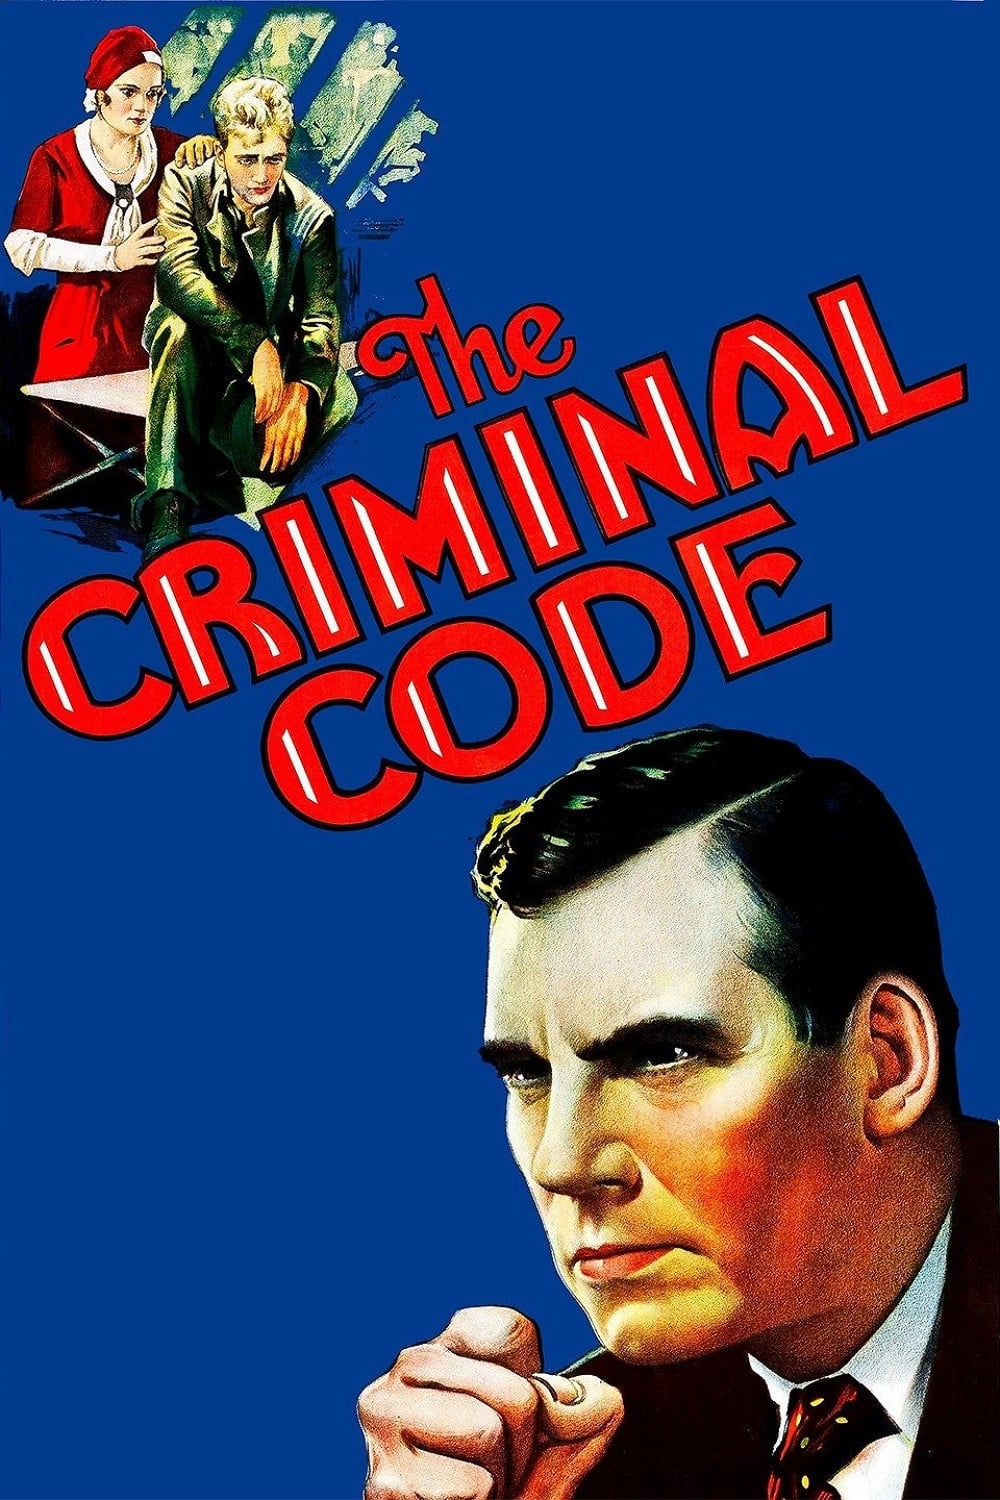 Le Code Criminel